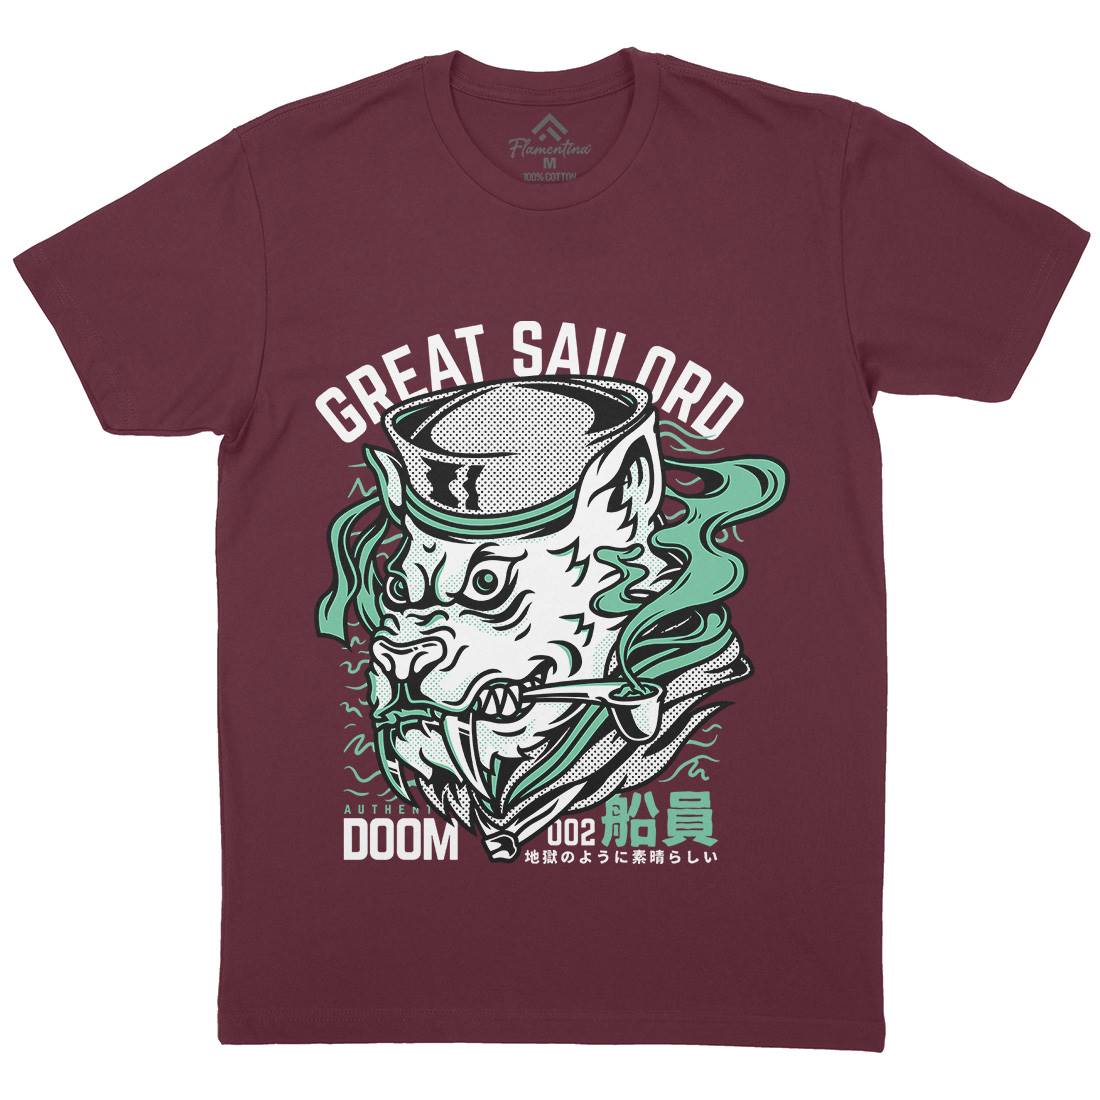 Great Sailord Mens Crew Neck T-Shirt Navy D601